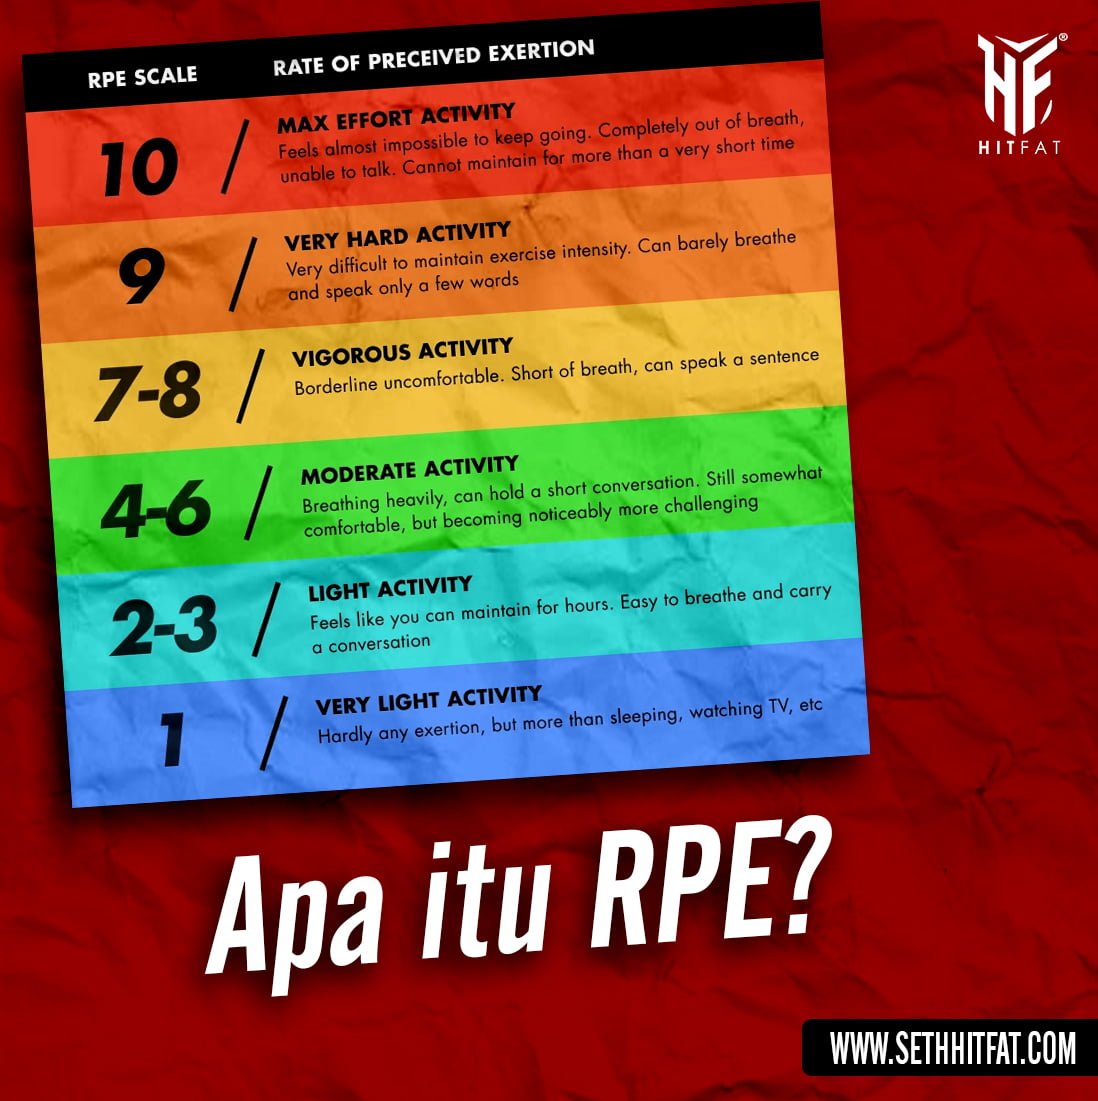 Rate of Perceived Exertion (RPE) ? Apa tu?